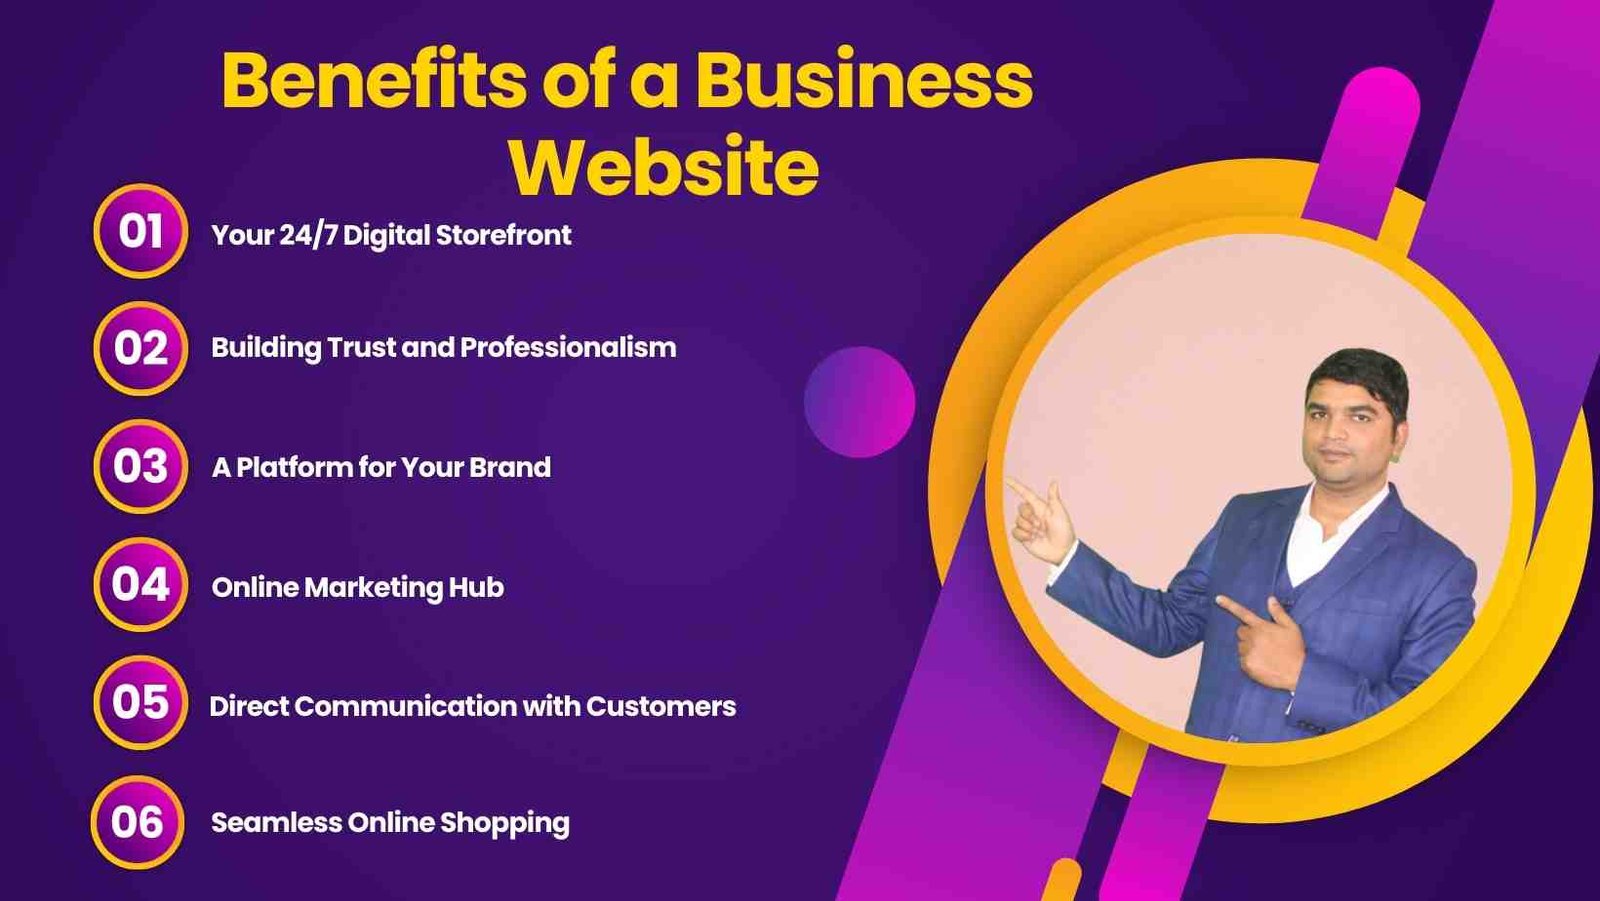 Benefits of a Business Website